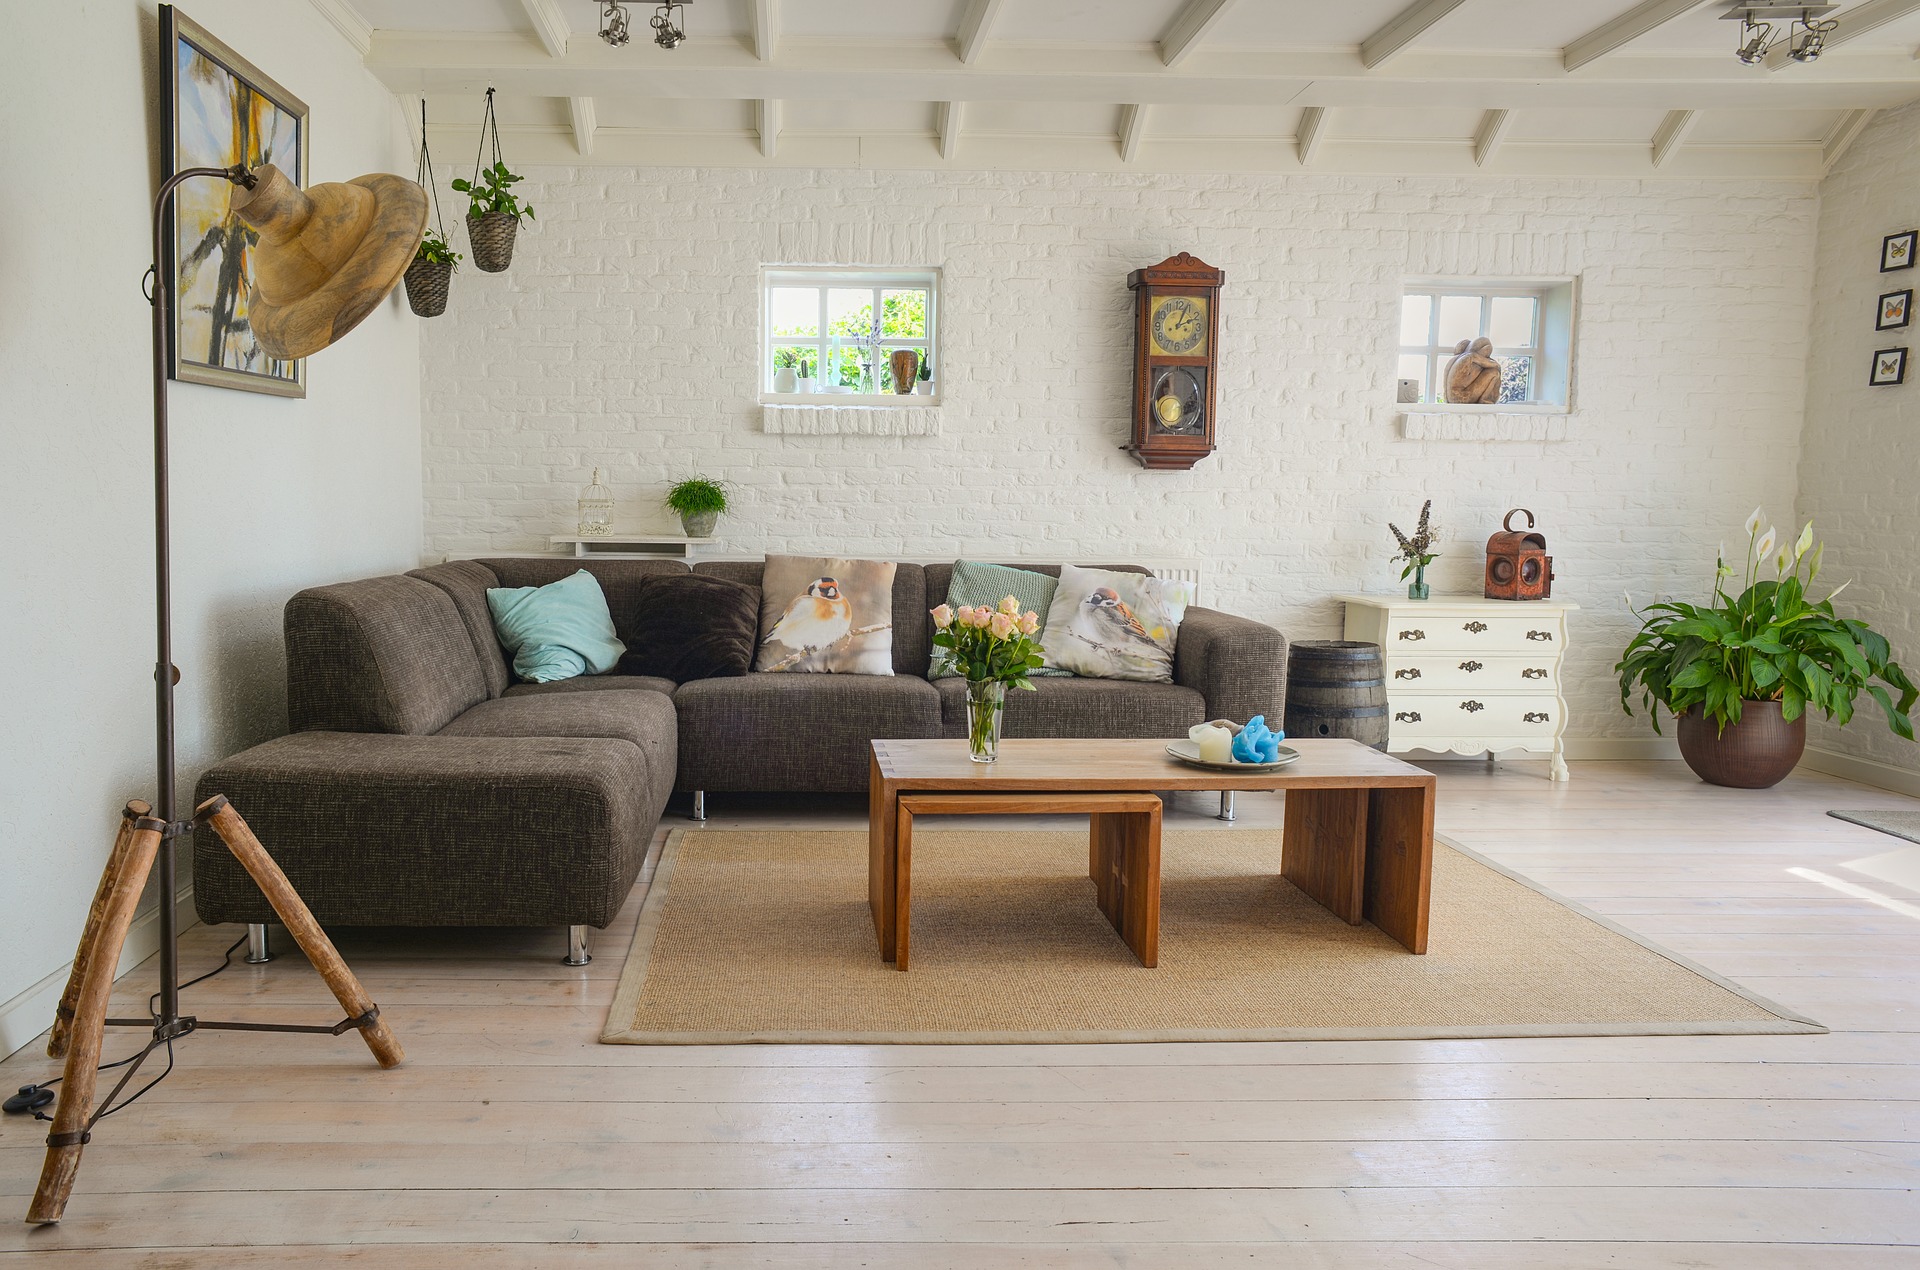 Interior Design Tips Make Your Home Look Cozy